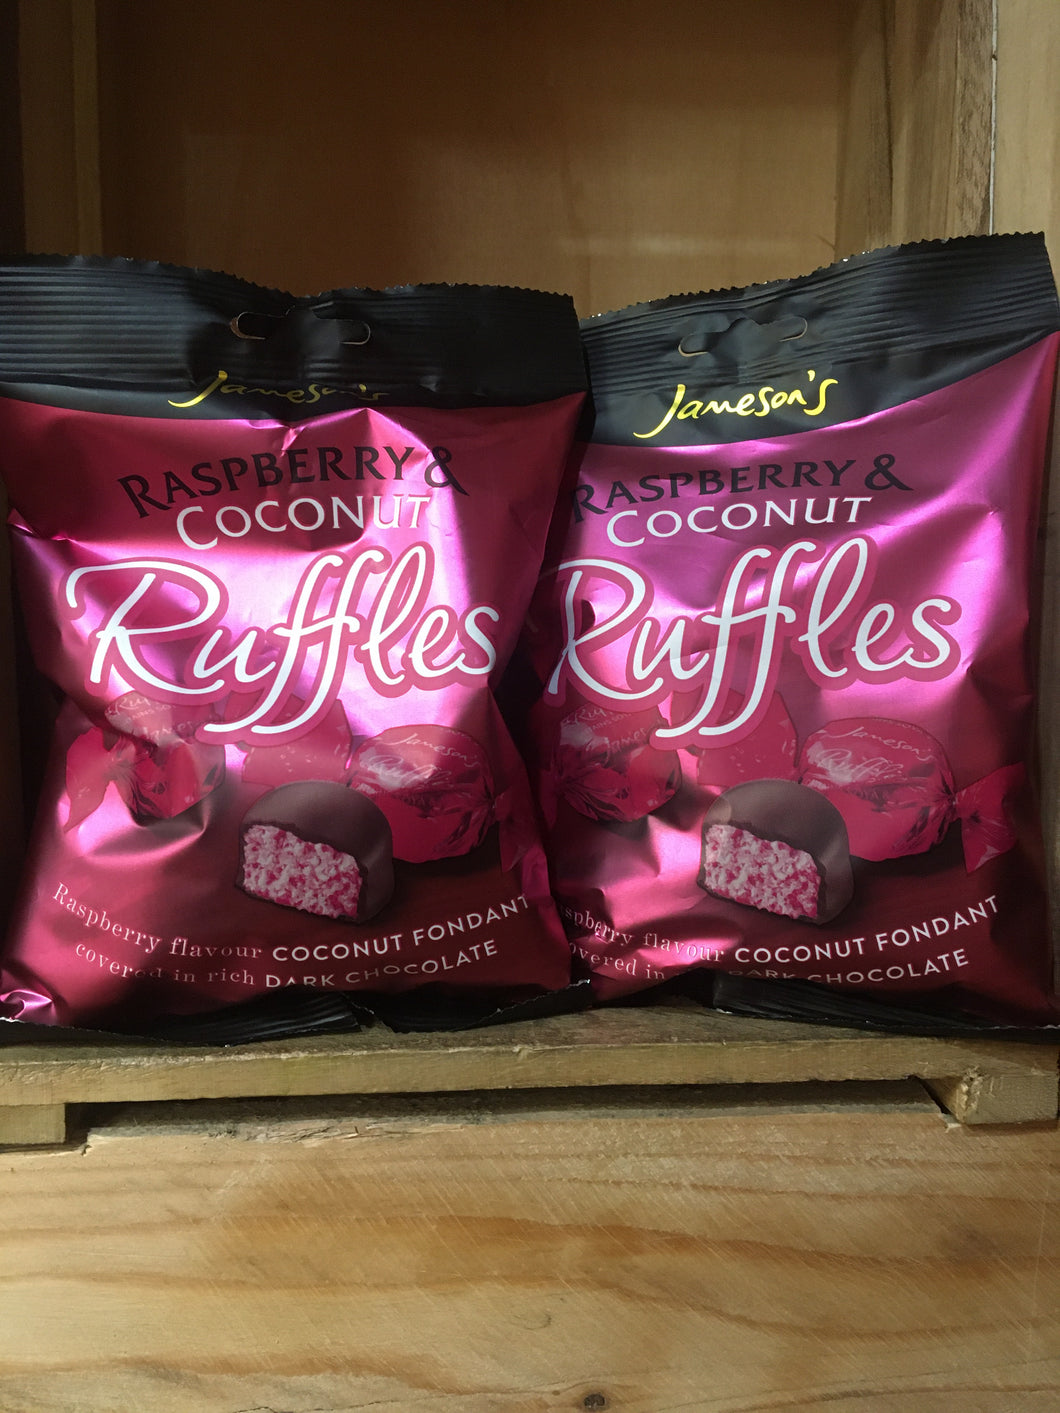 2x Jameson's Raspberry & Coconut Ruffles Chocolates (2 Packs of 135g)